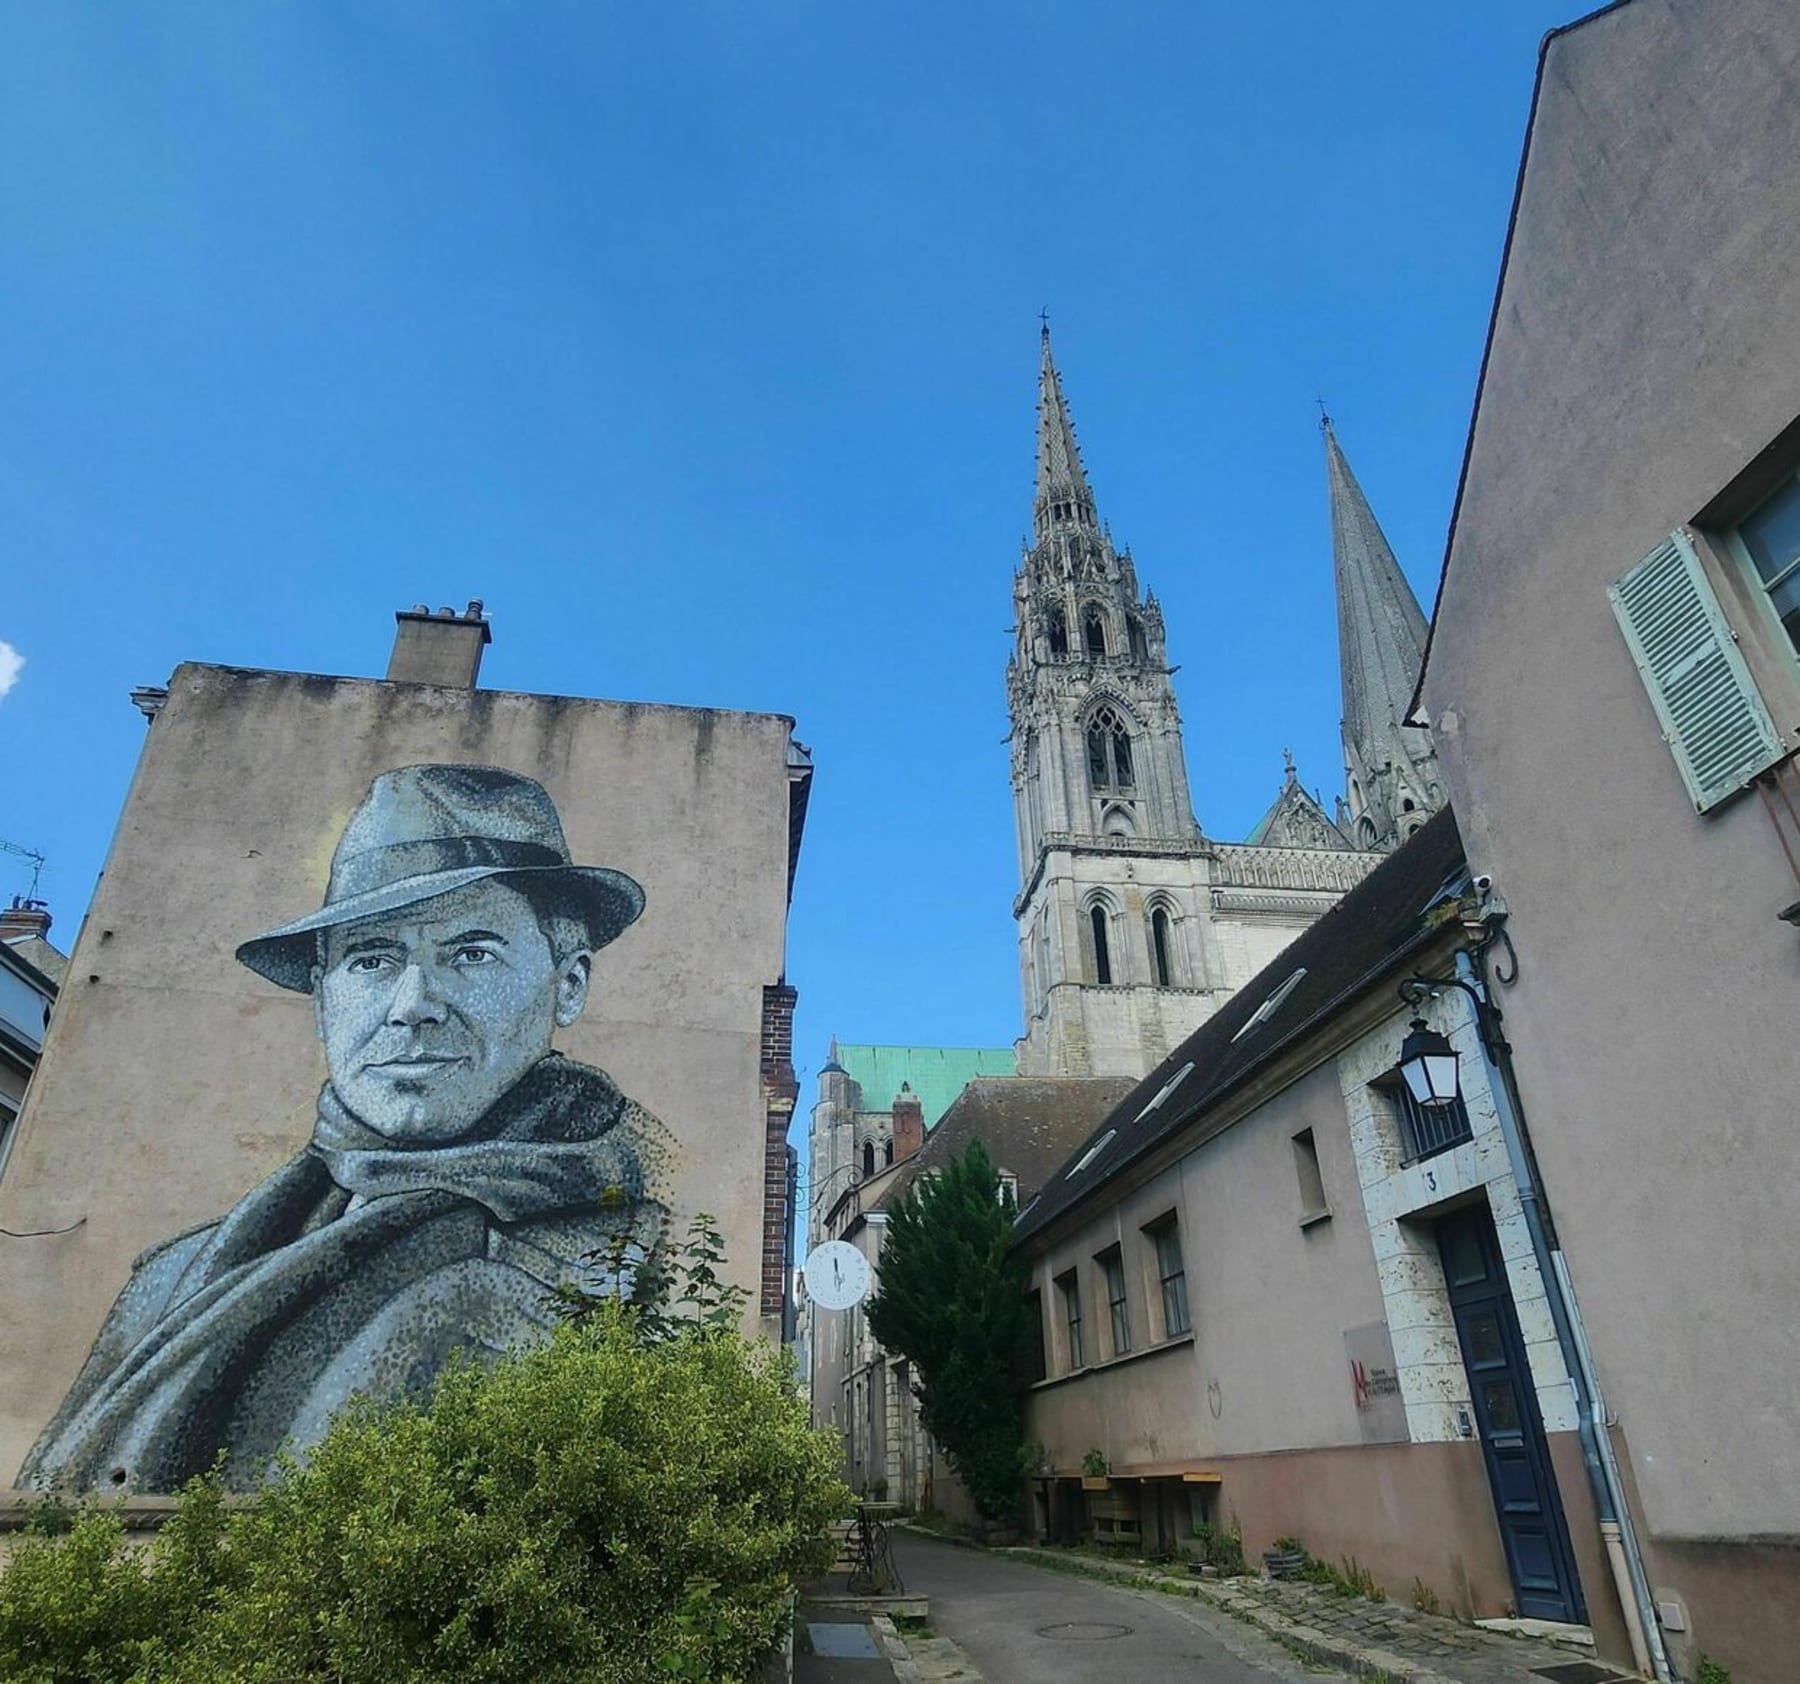 Randonnée Chartres - Balade dans la ville de Chartres 28